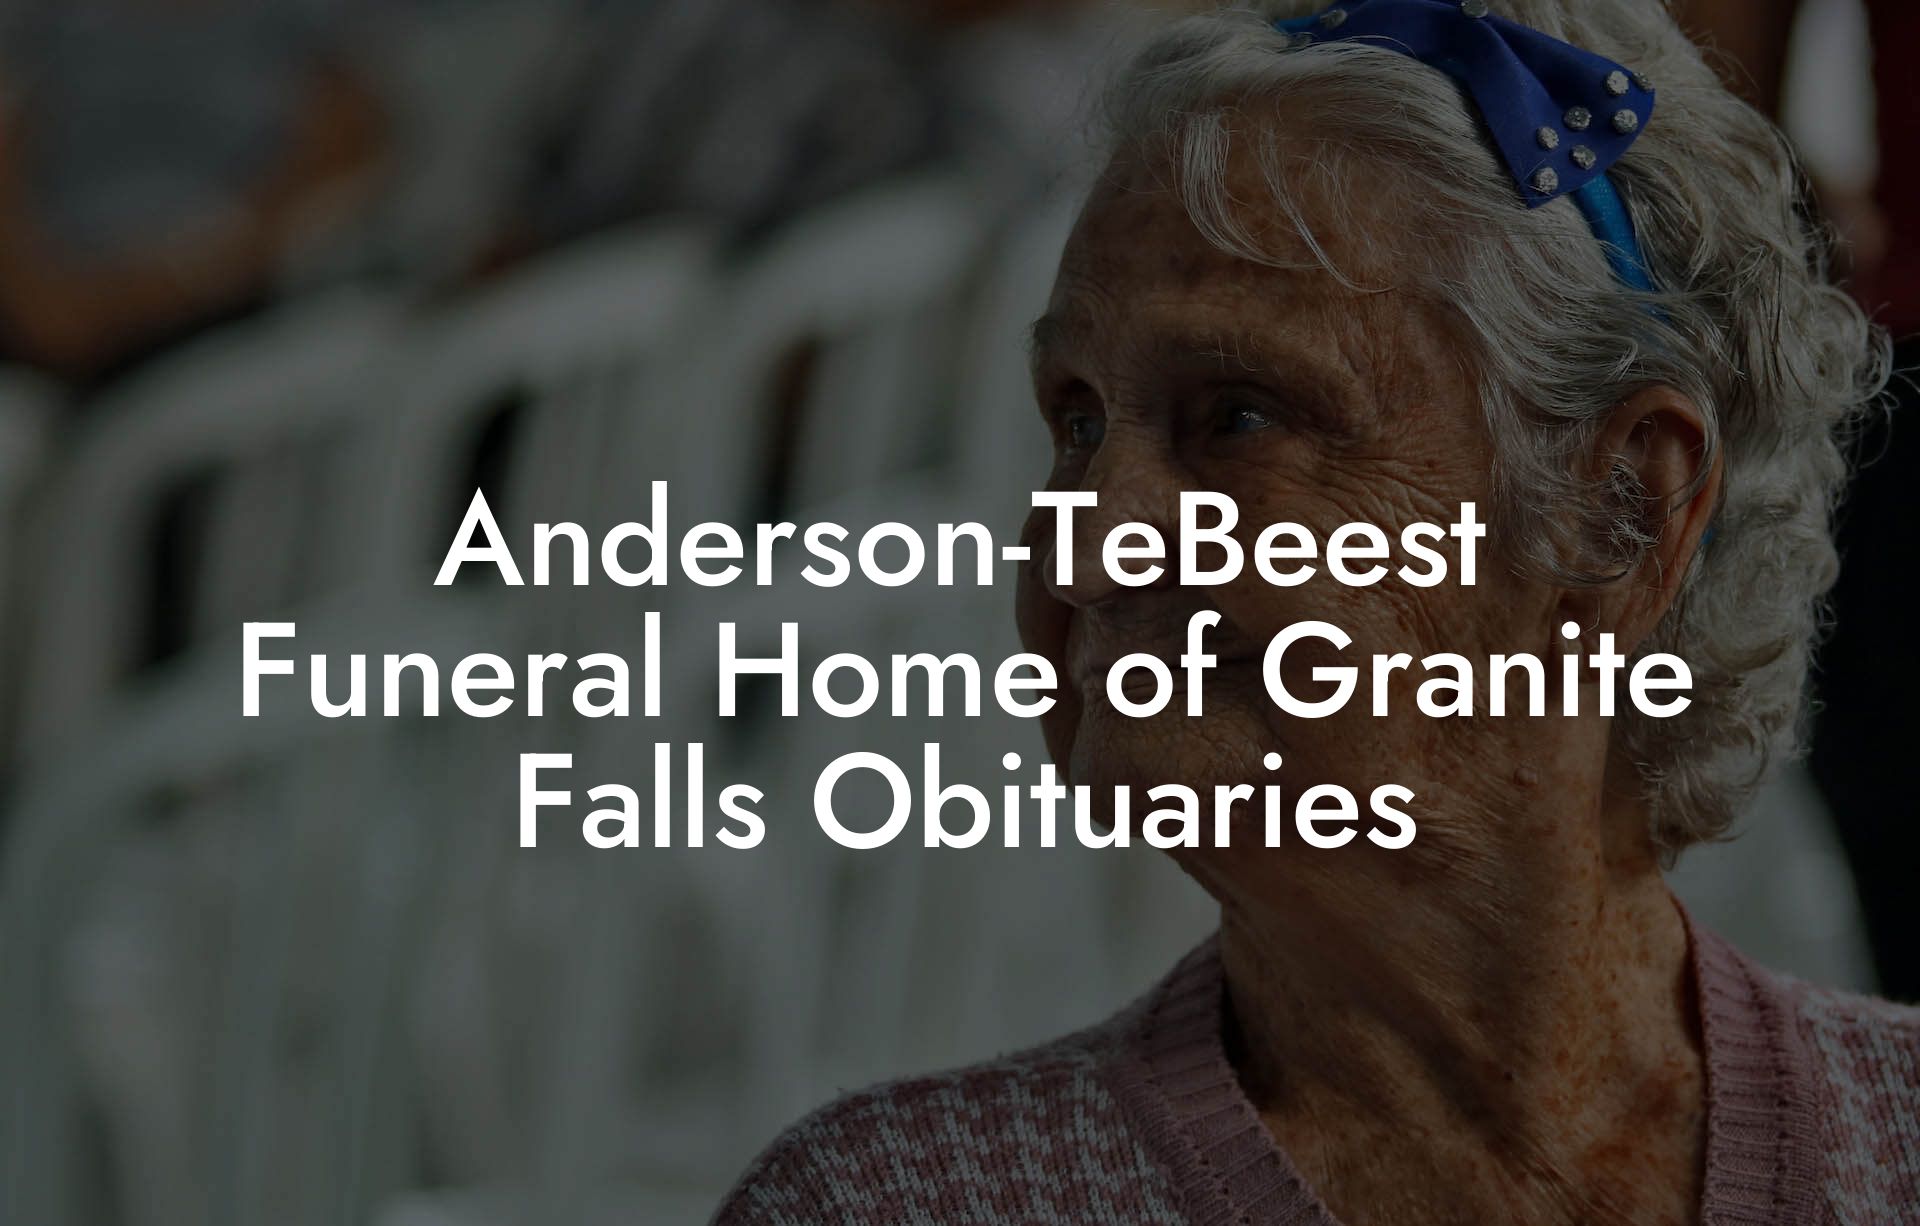 Anderson-TeBeest Funeral Home of Granite Falls Obituaries